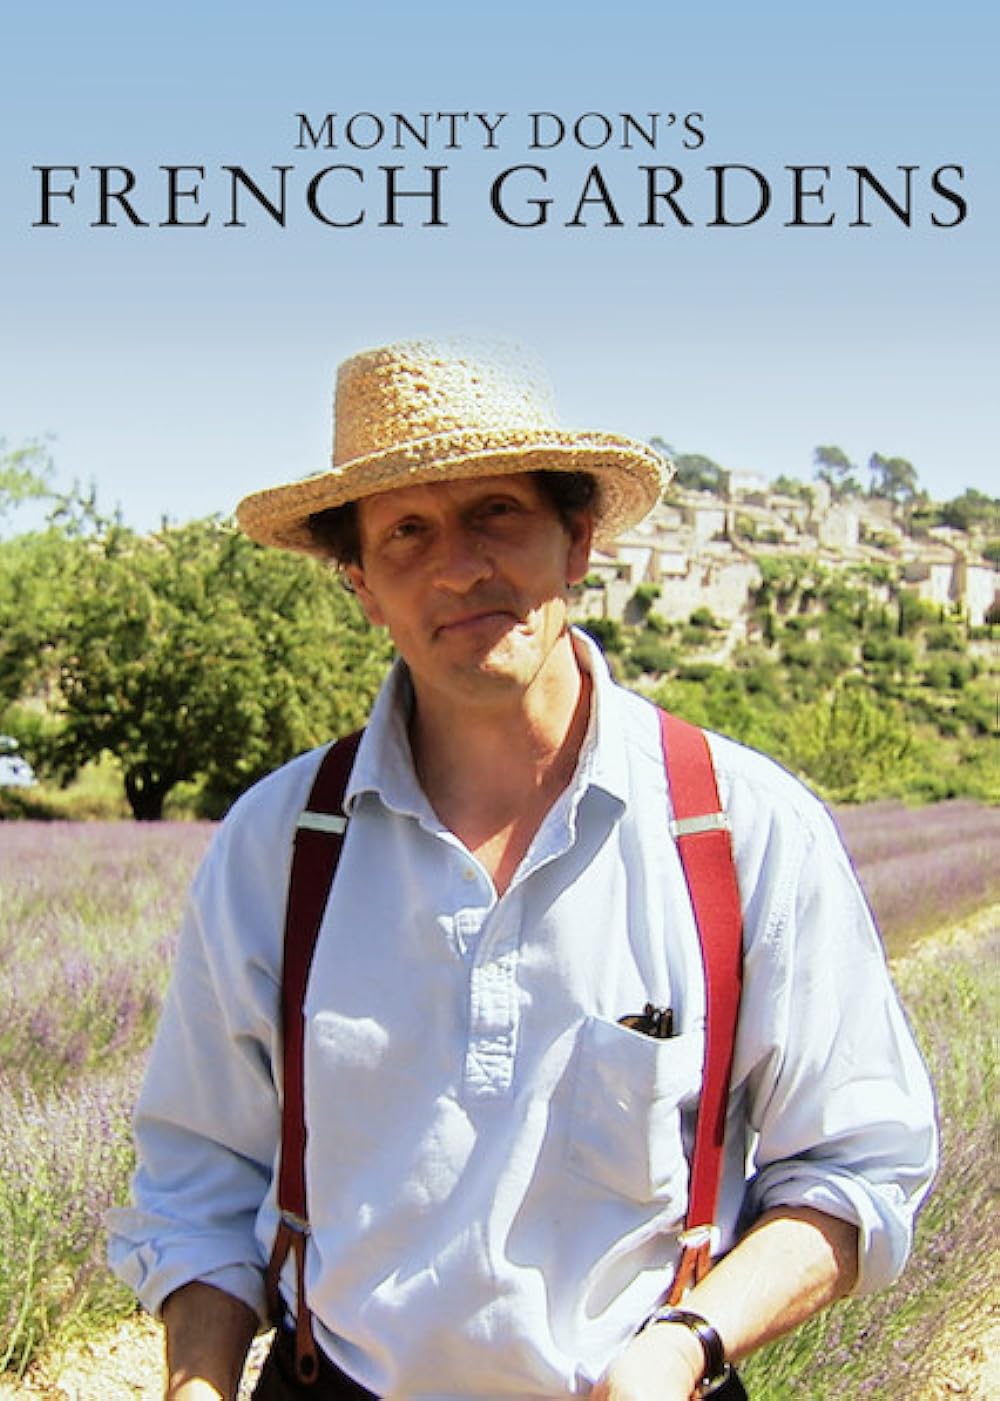 Monty Don's French Gardens